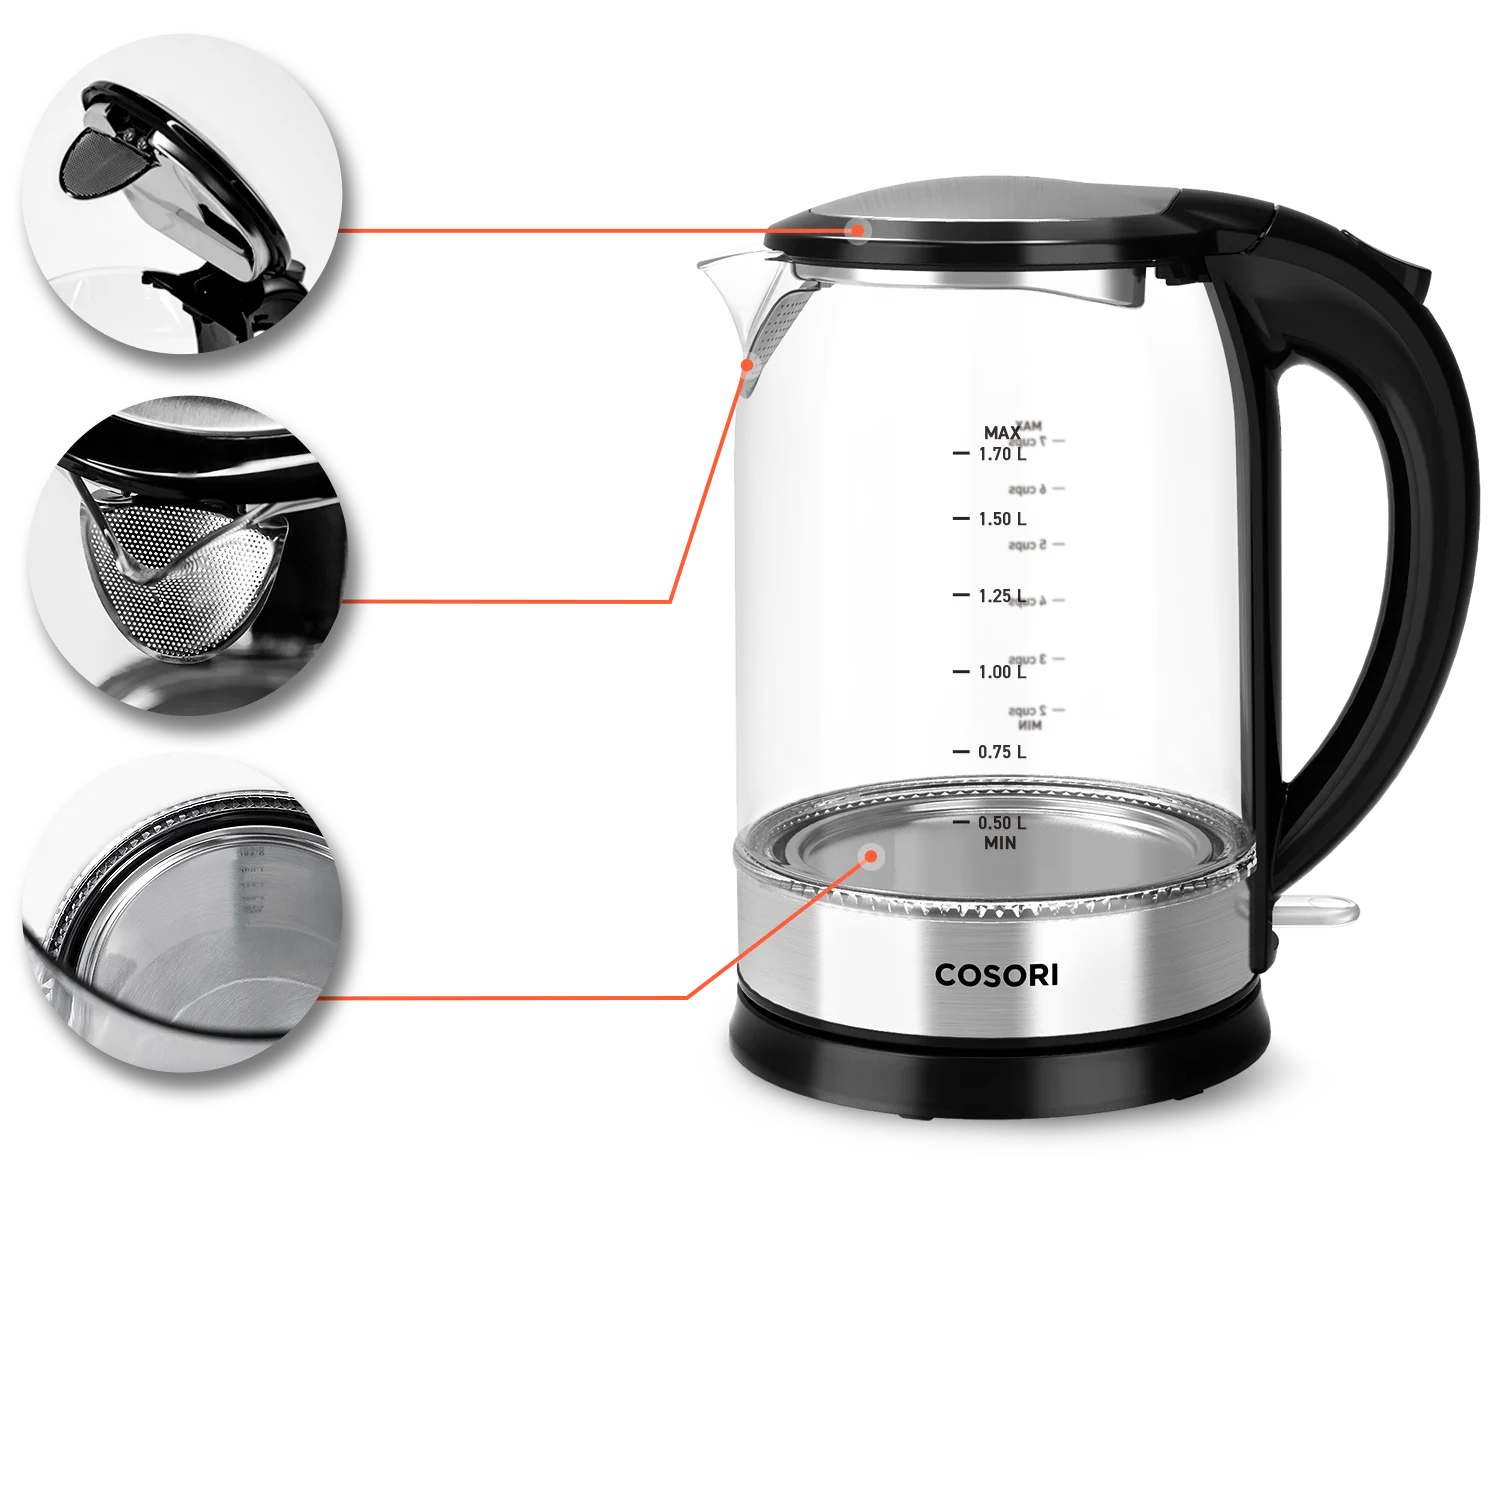 COSORI Electric Kettle, Tea Kettle Pot, 1.7L/1500W, Stainless Steel Inner  Lid & Filter, Hot Water Kettle Teapot Boiler & Heater, Automatic Shut Off